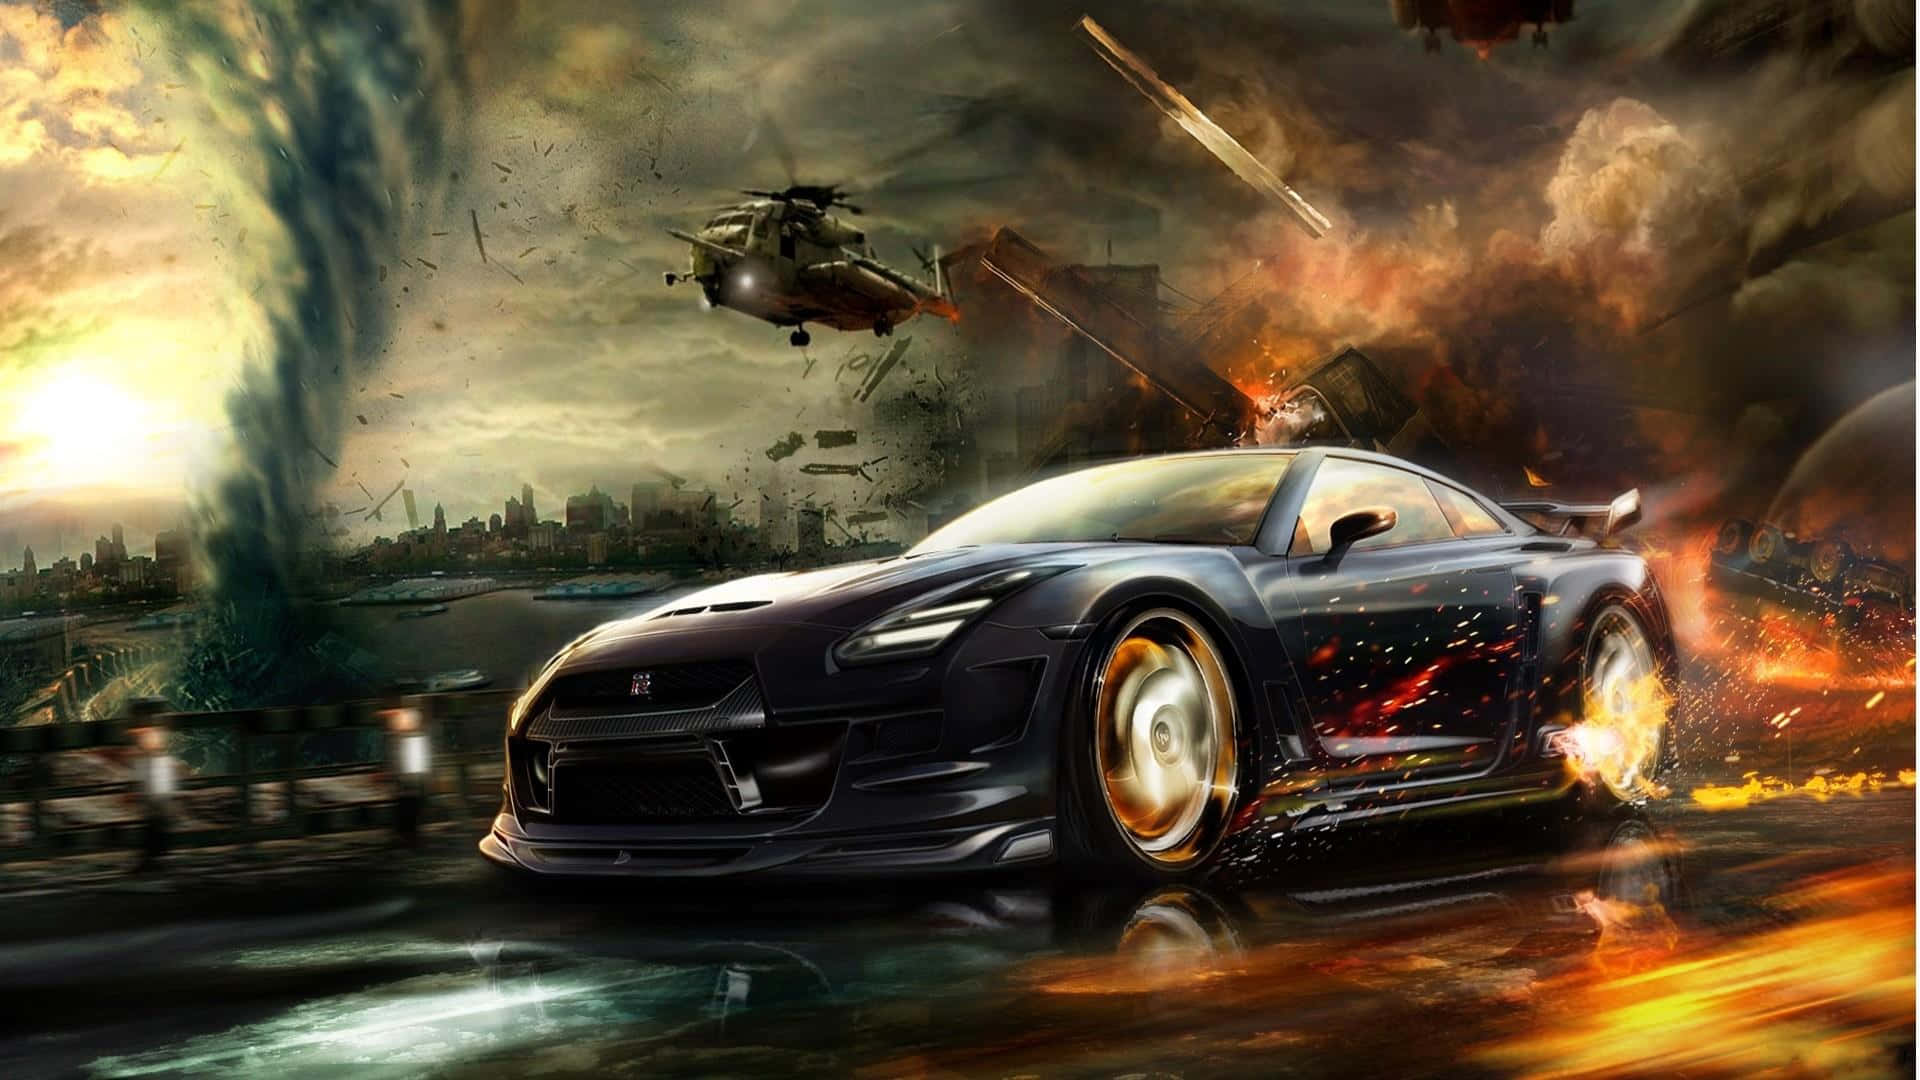 High-Octane Racing Game Action Wallpaper